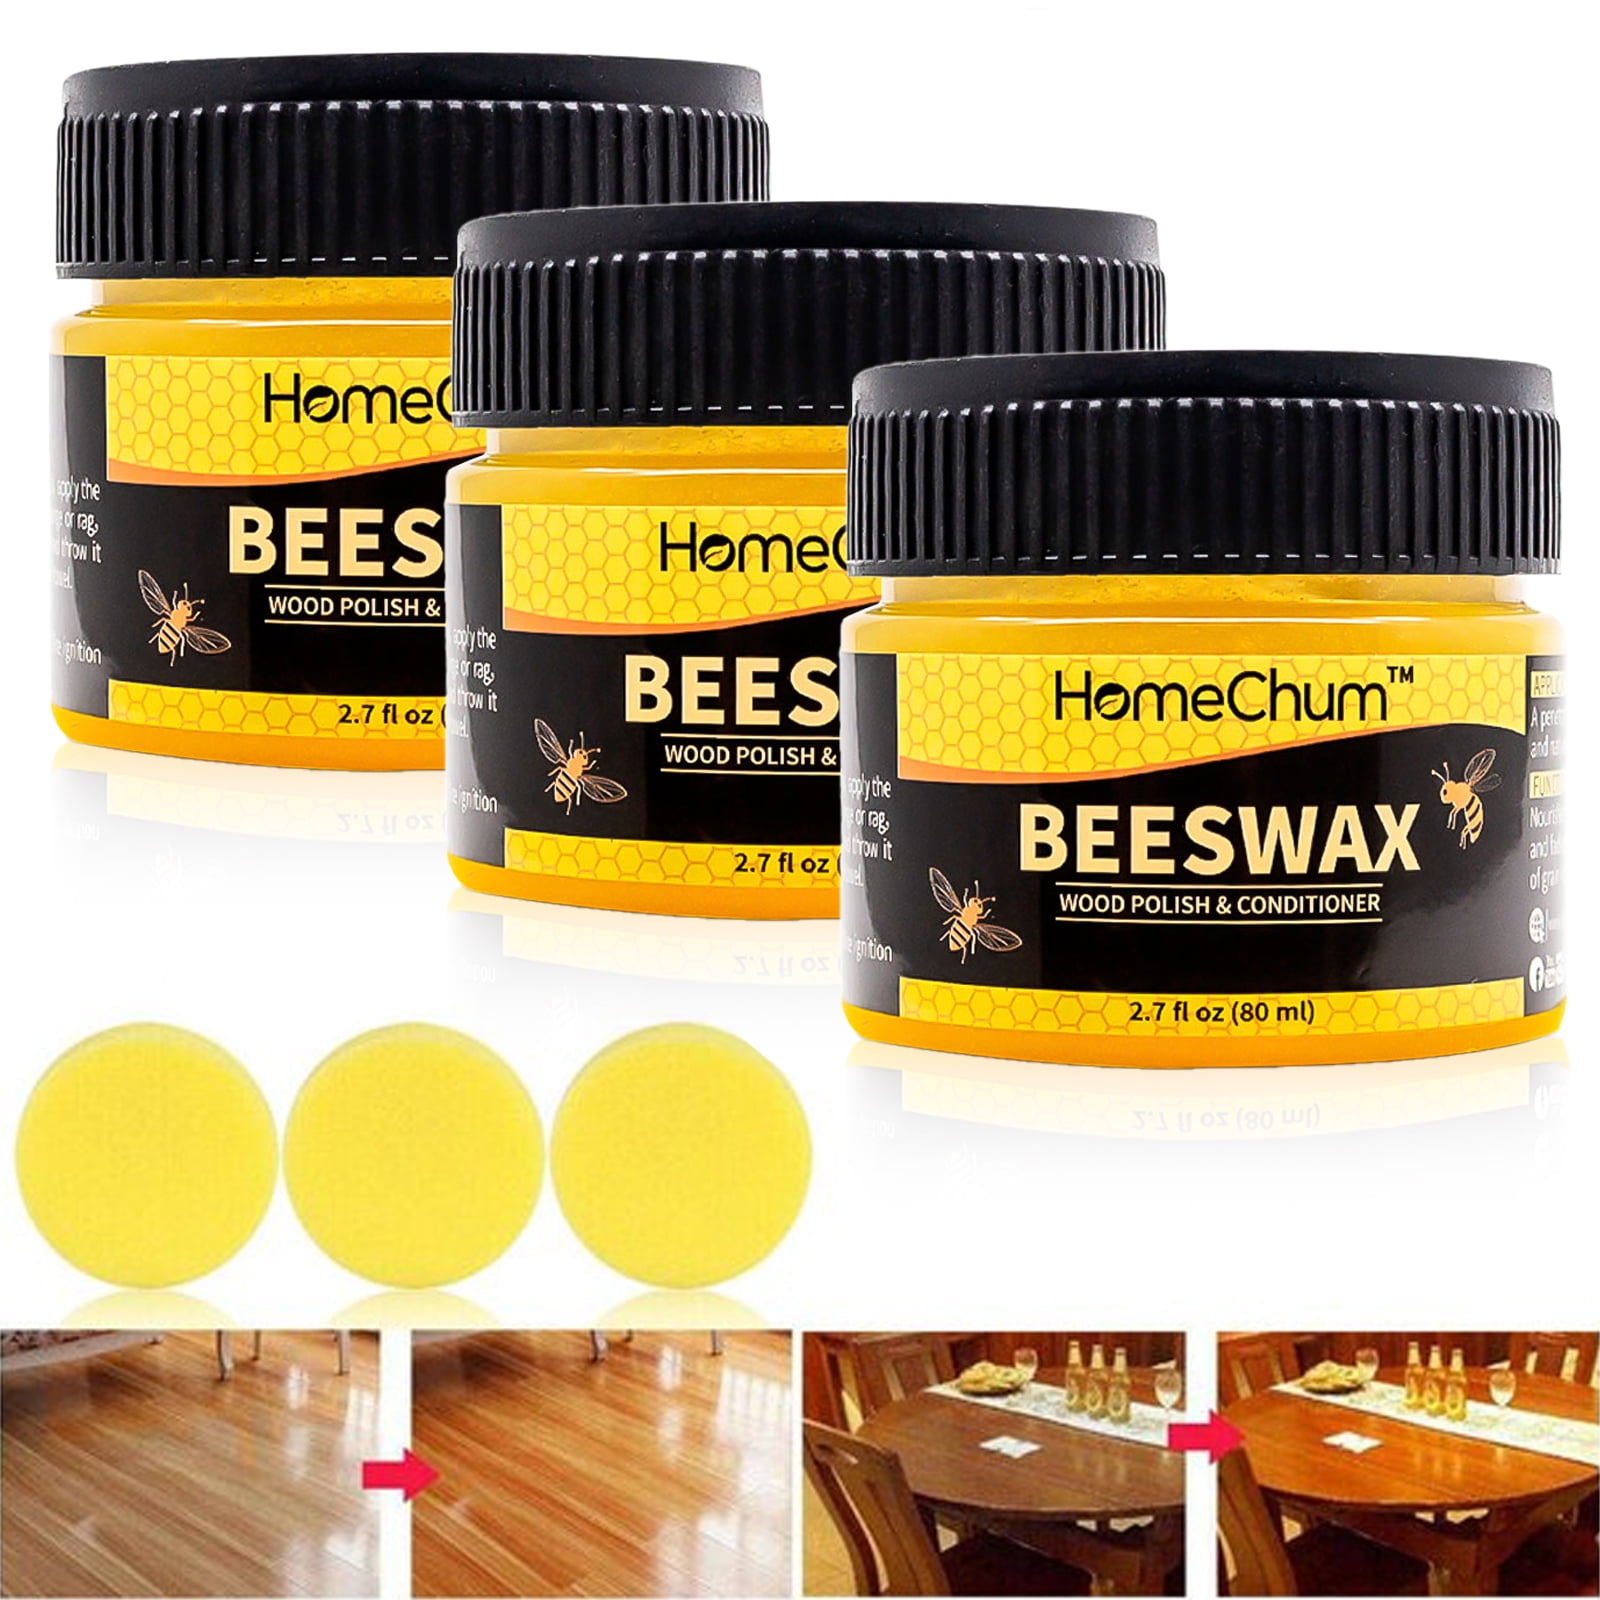 Details about   1-4PC Natural Wood Seasoning Wax Wood Furniture Care Polishing Seasoning Bee Wax 